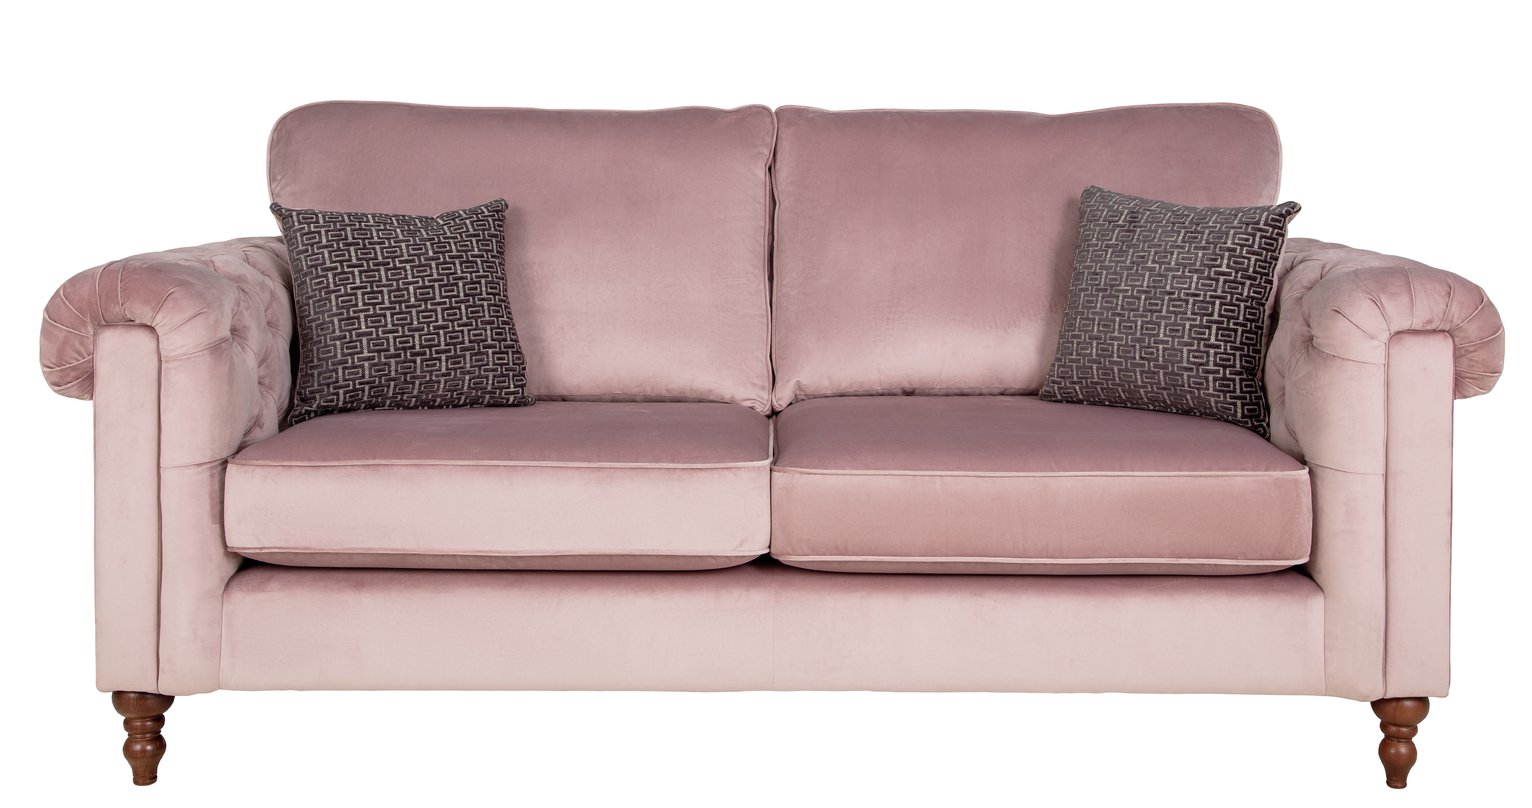 Argos Home Rebecca 3 Seater Fabric Sofa - Blush